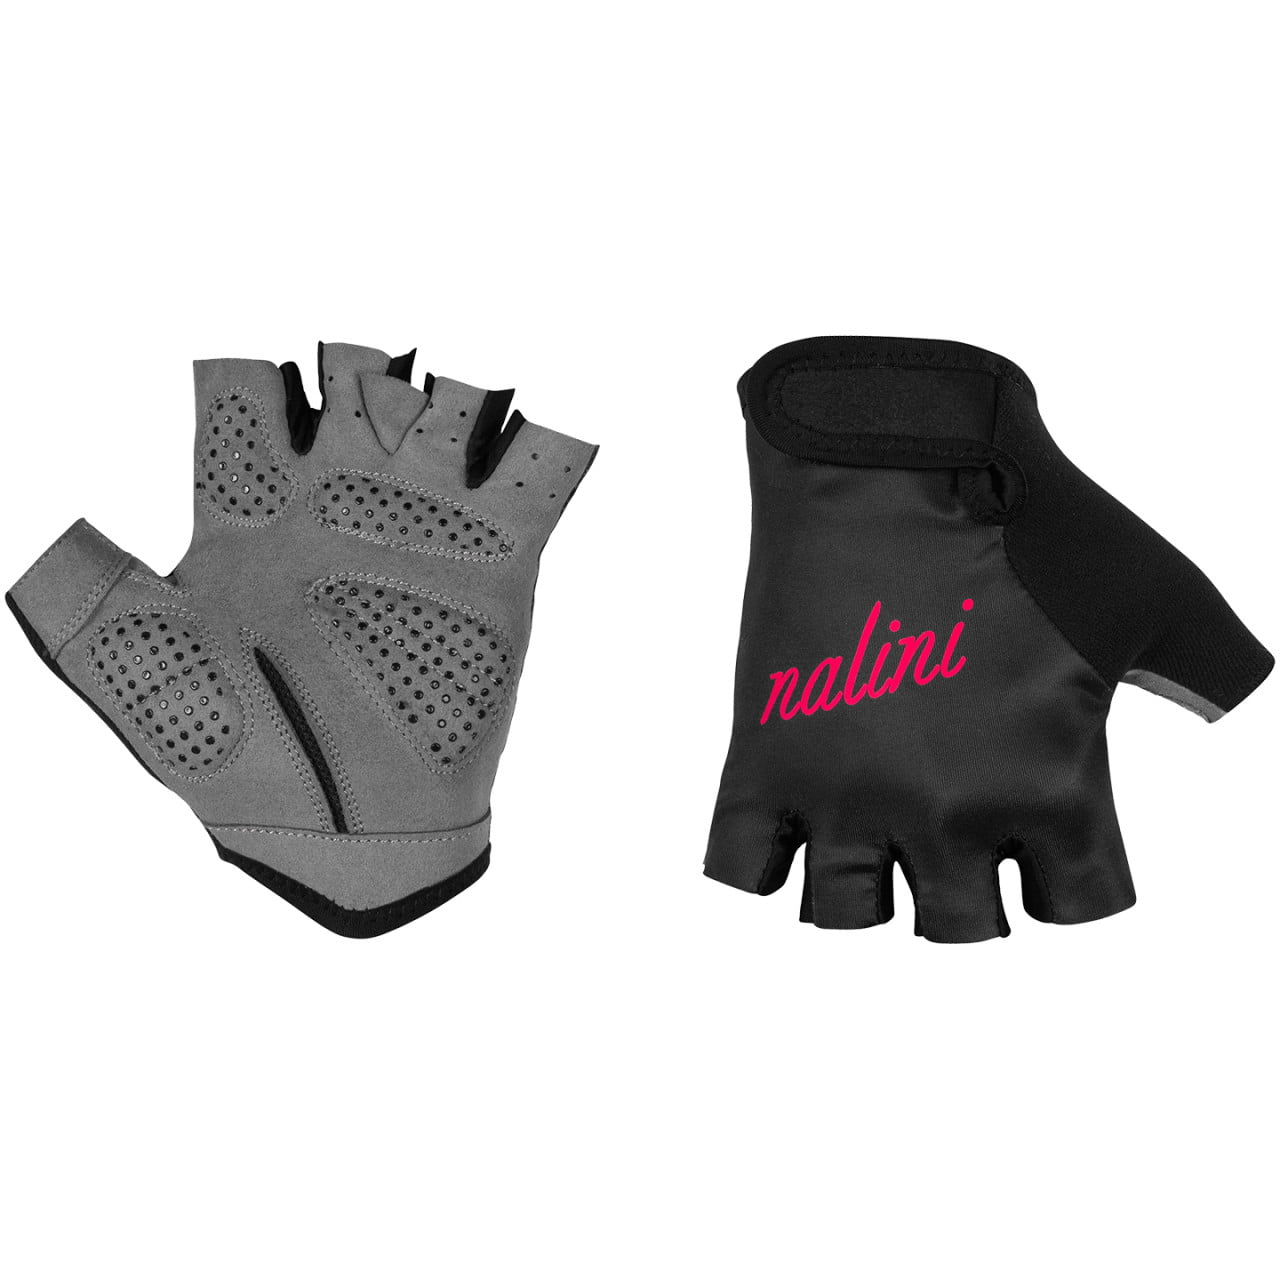 New Roxana Women's Gloves